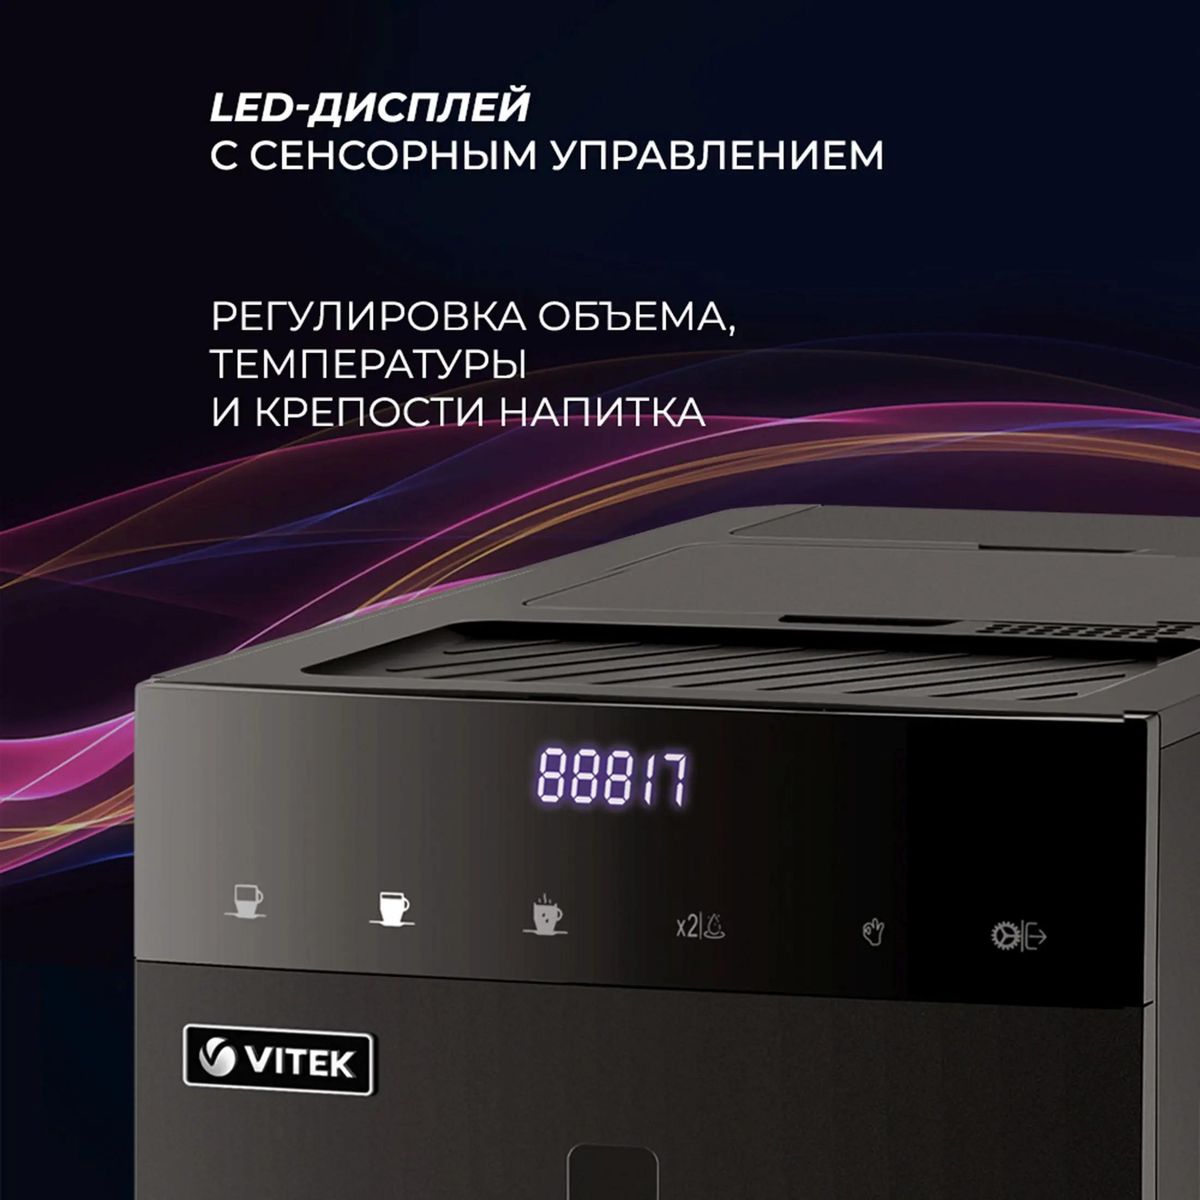 Vitek Metropolis VT-8700